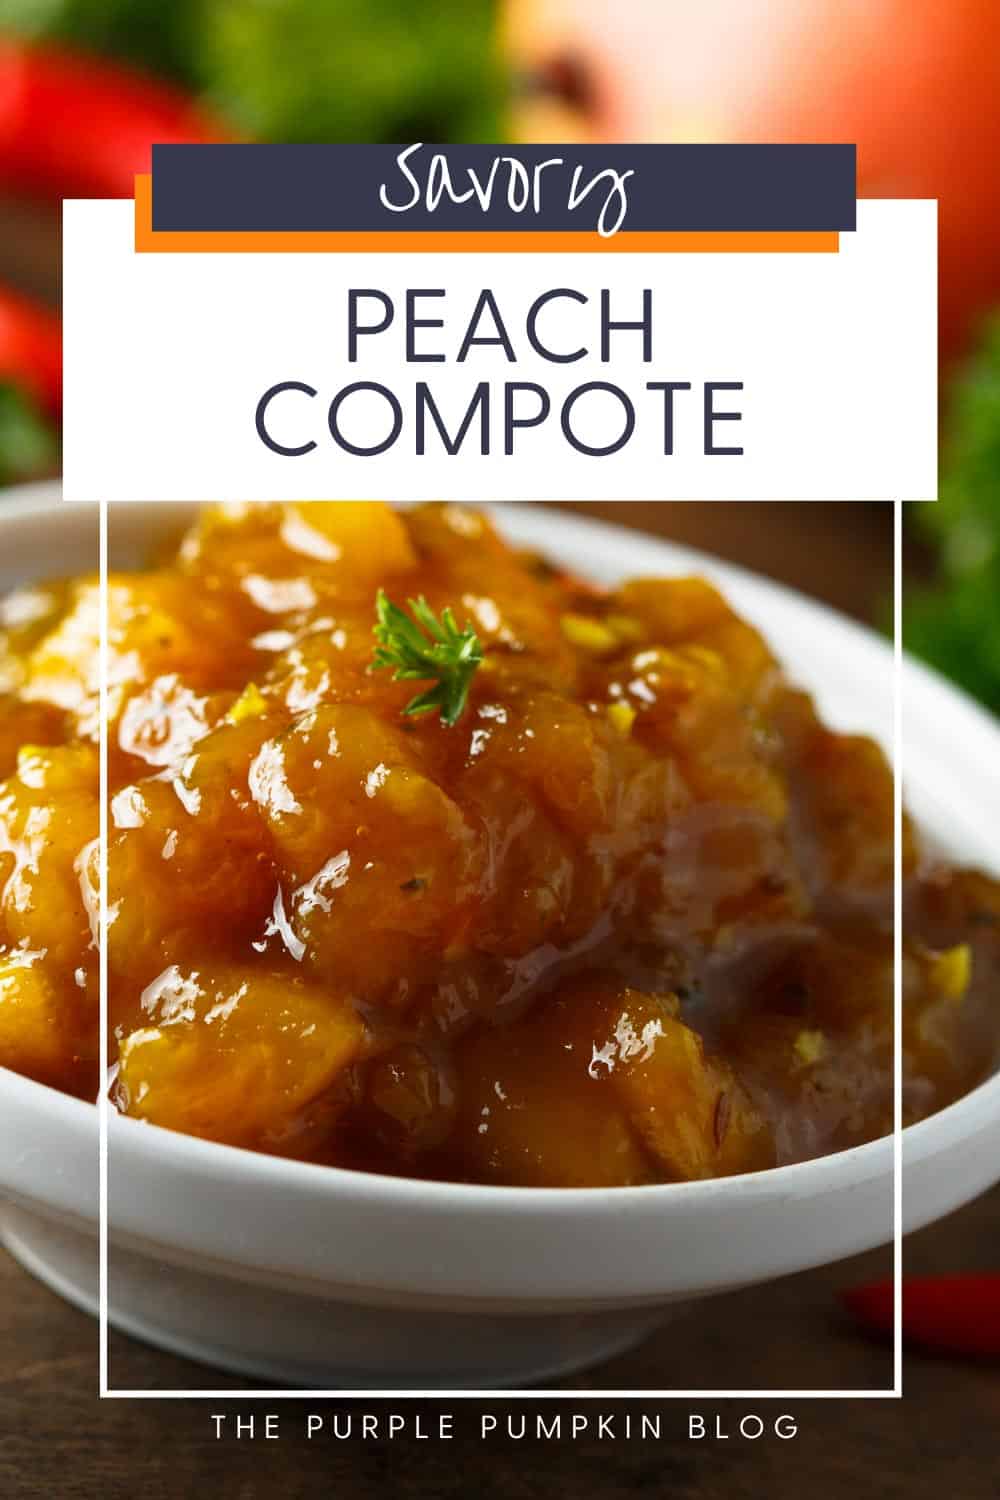 Savory-Peach-Compote-Recipe